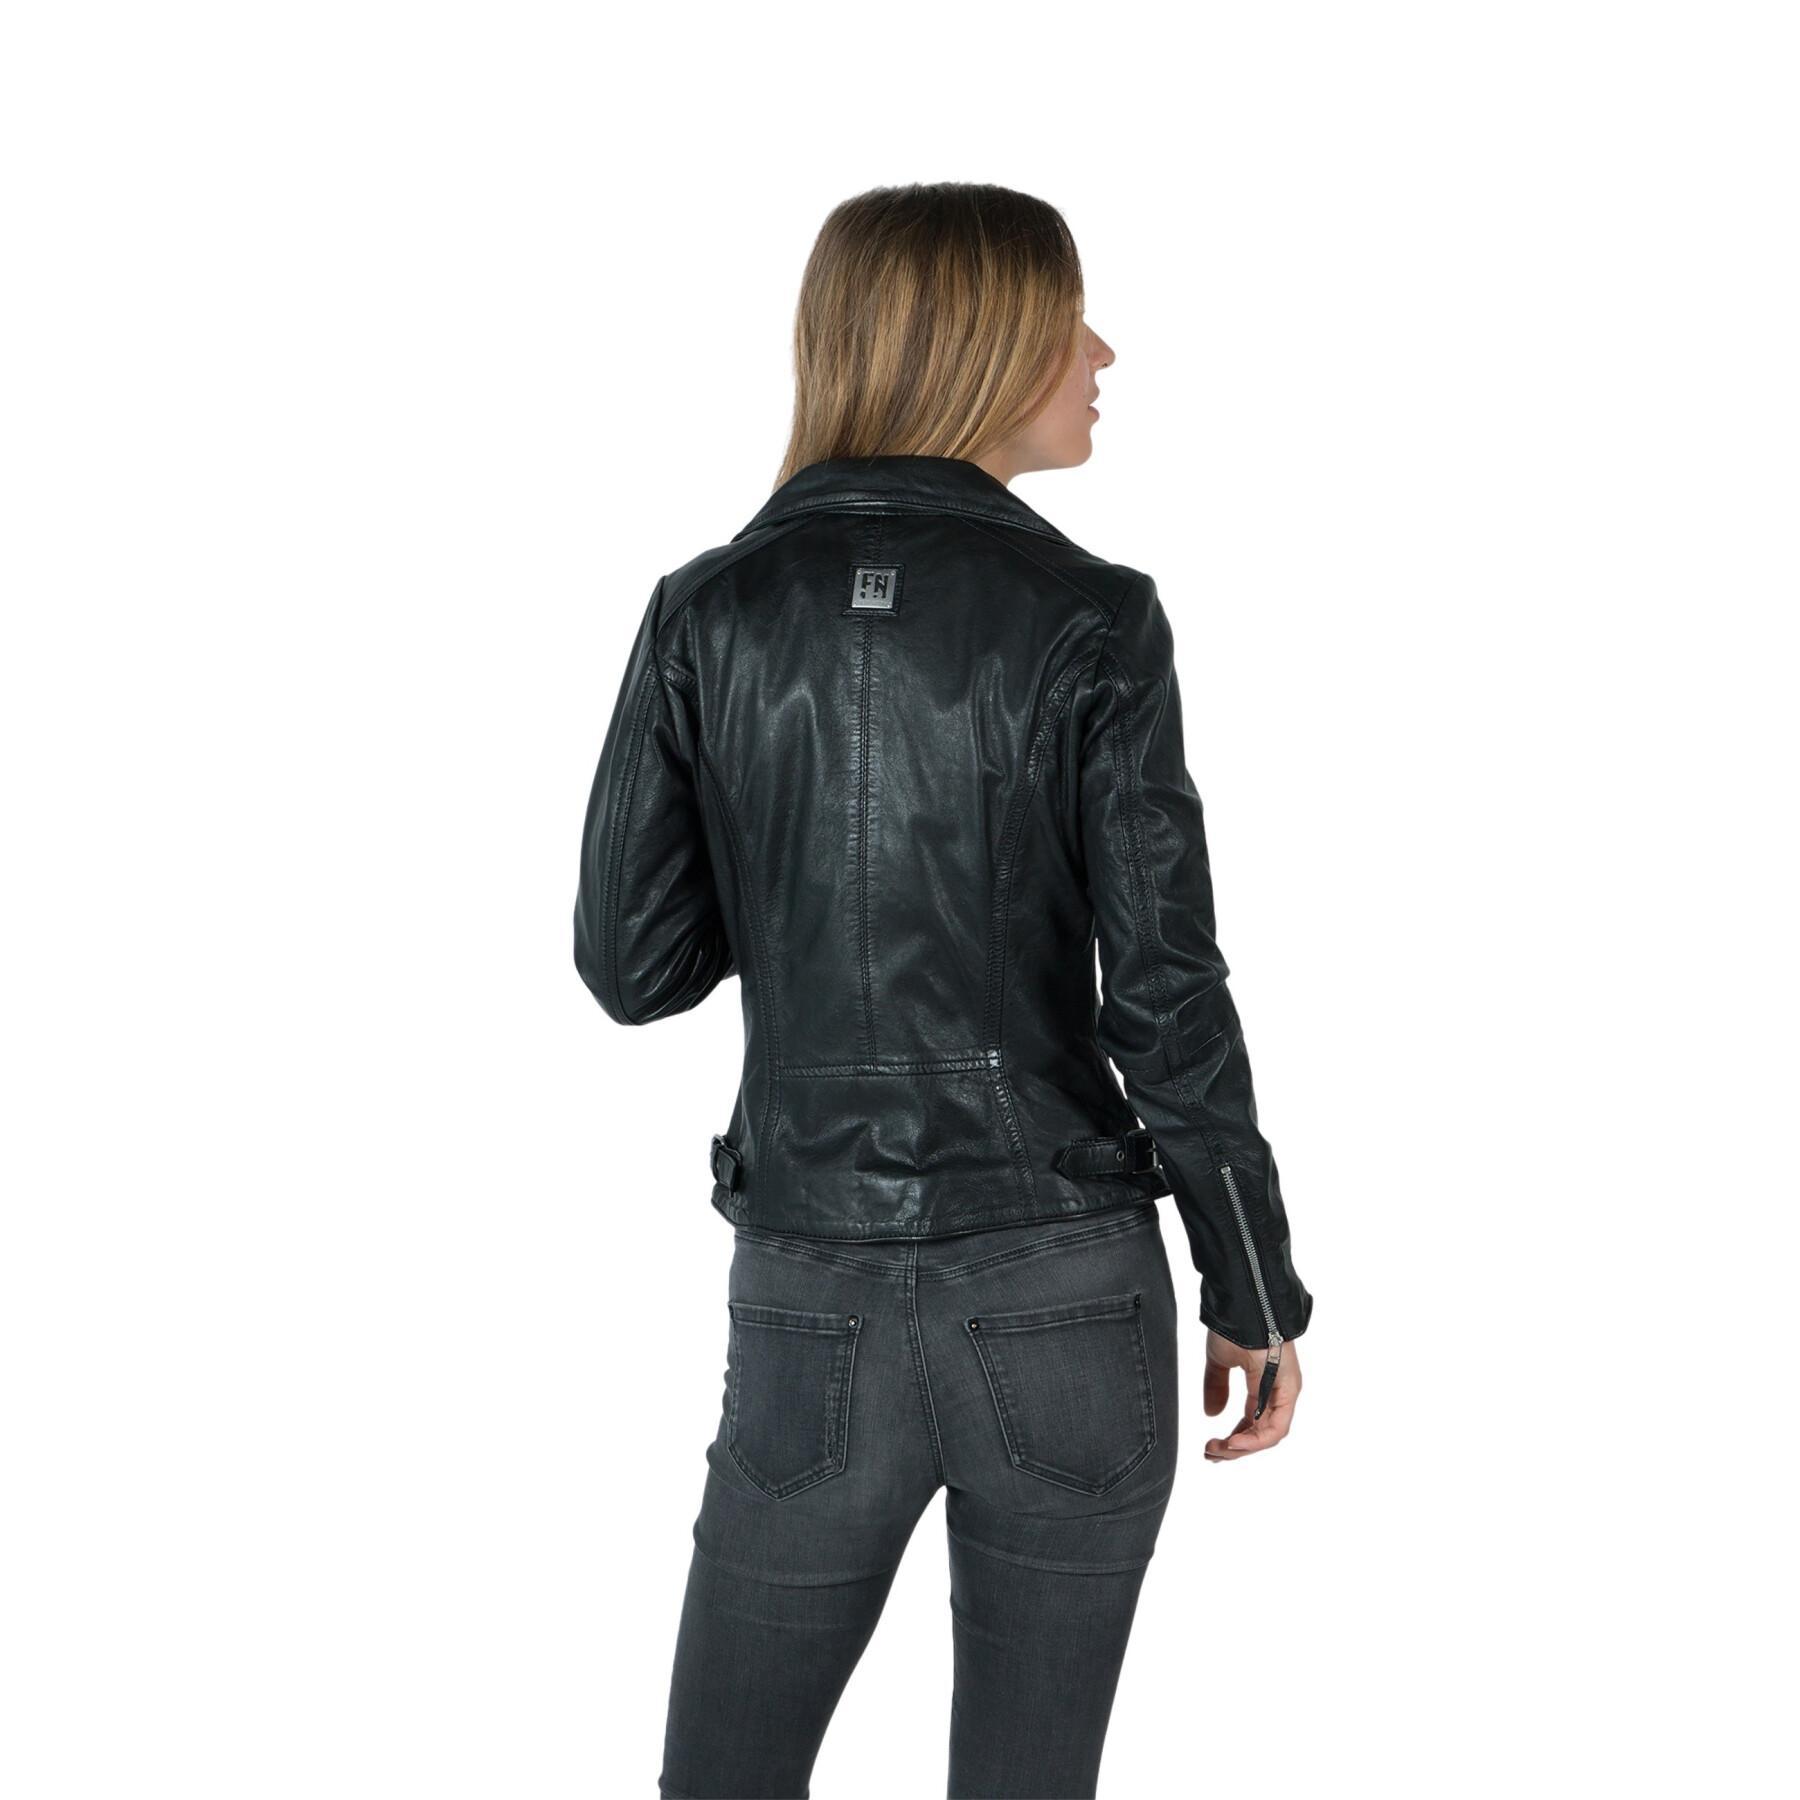 Leather jacket woman Freaky Nation Biker Princess